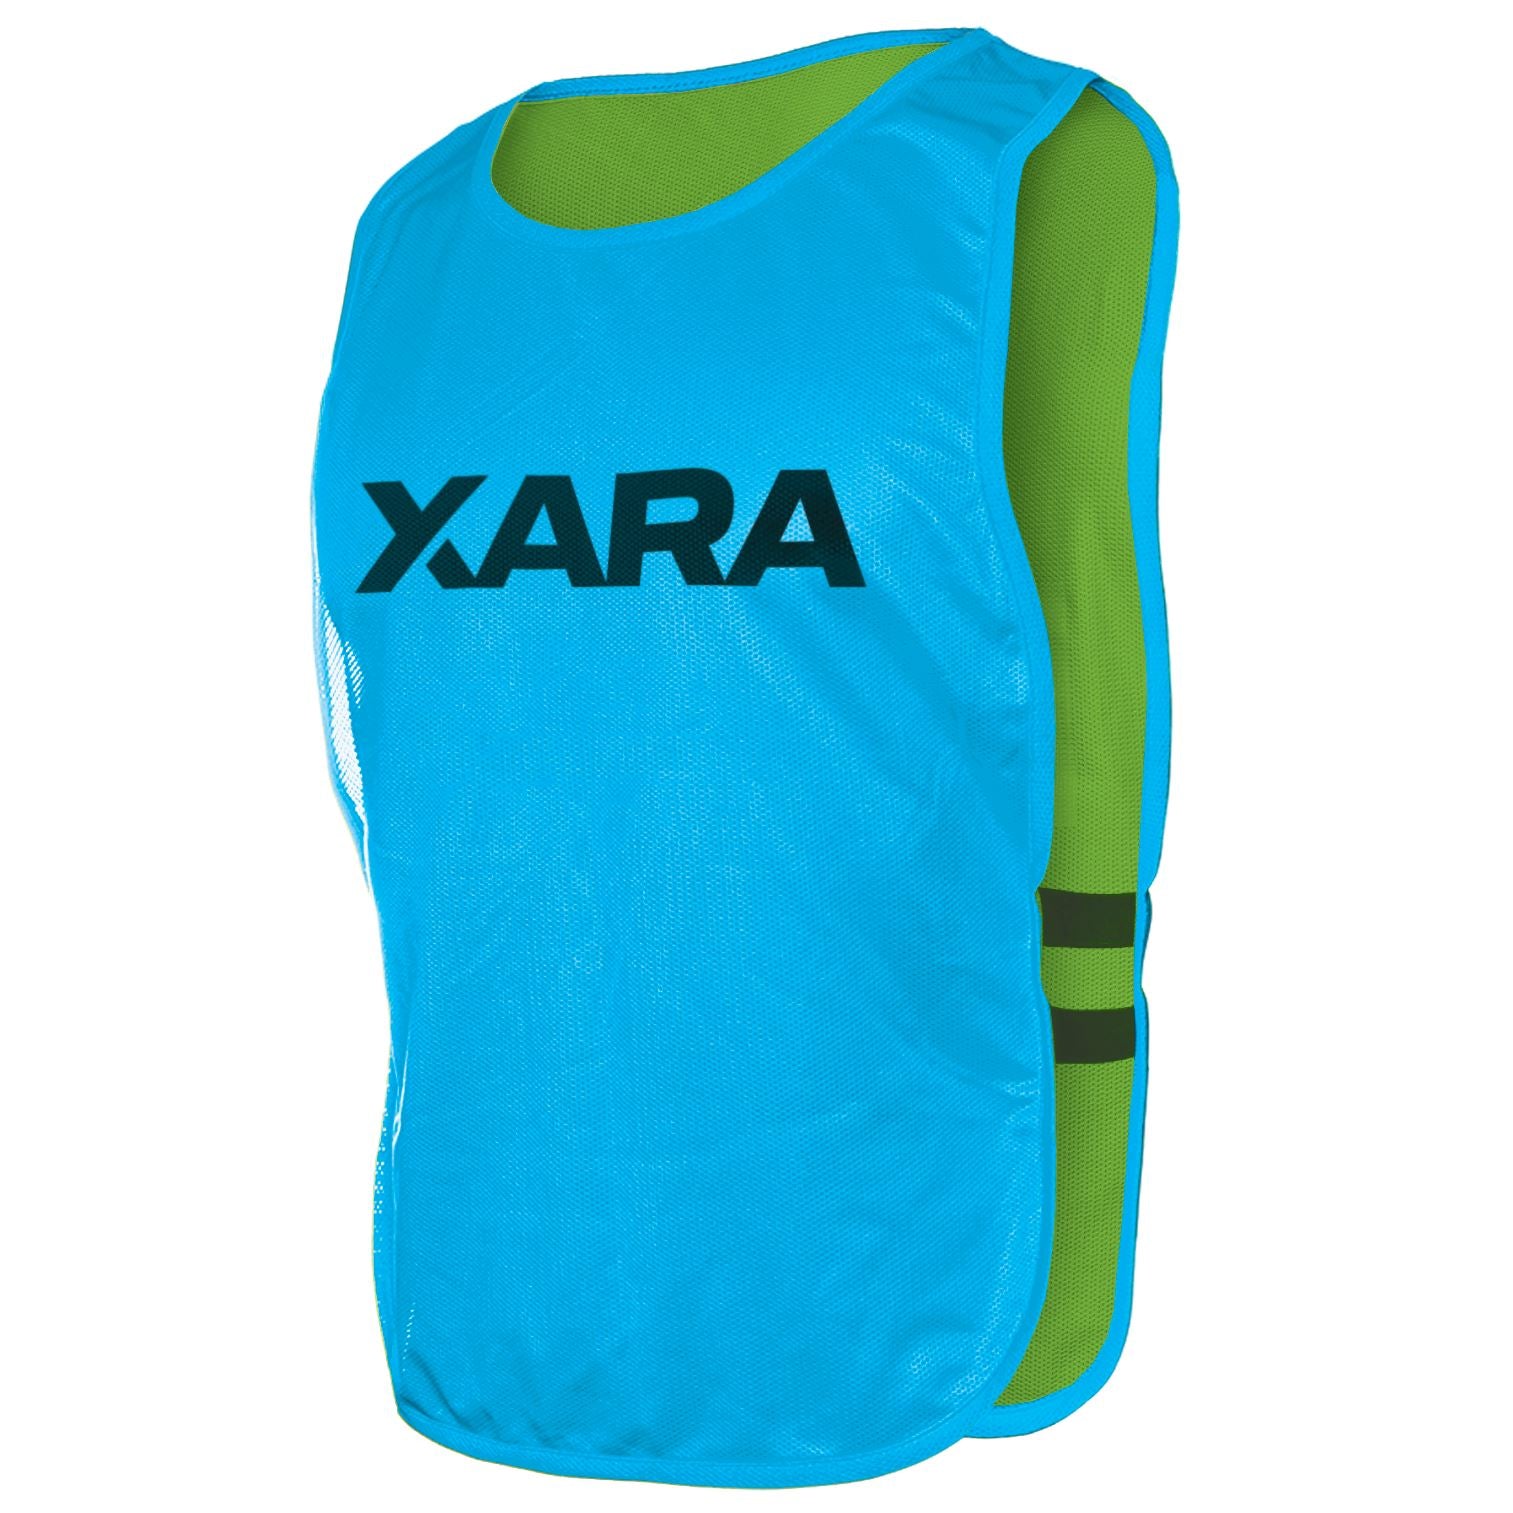 Reversible Training Bib - Unisex Coaches Gear Xara Soccer Bright Blue/Light Green Youth 